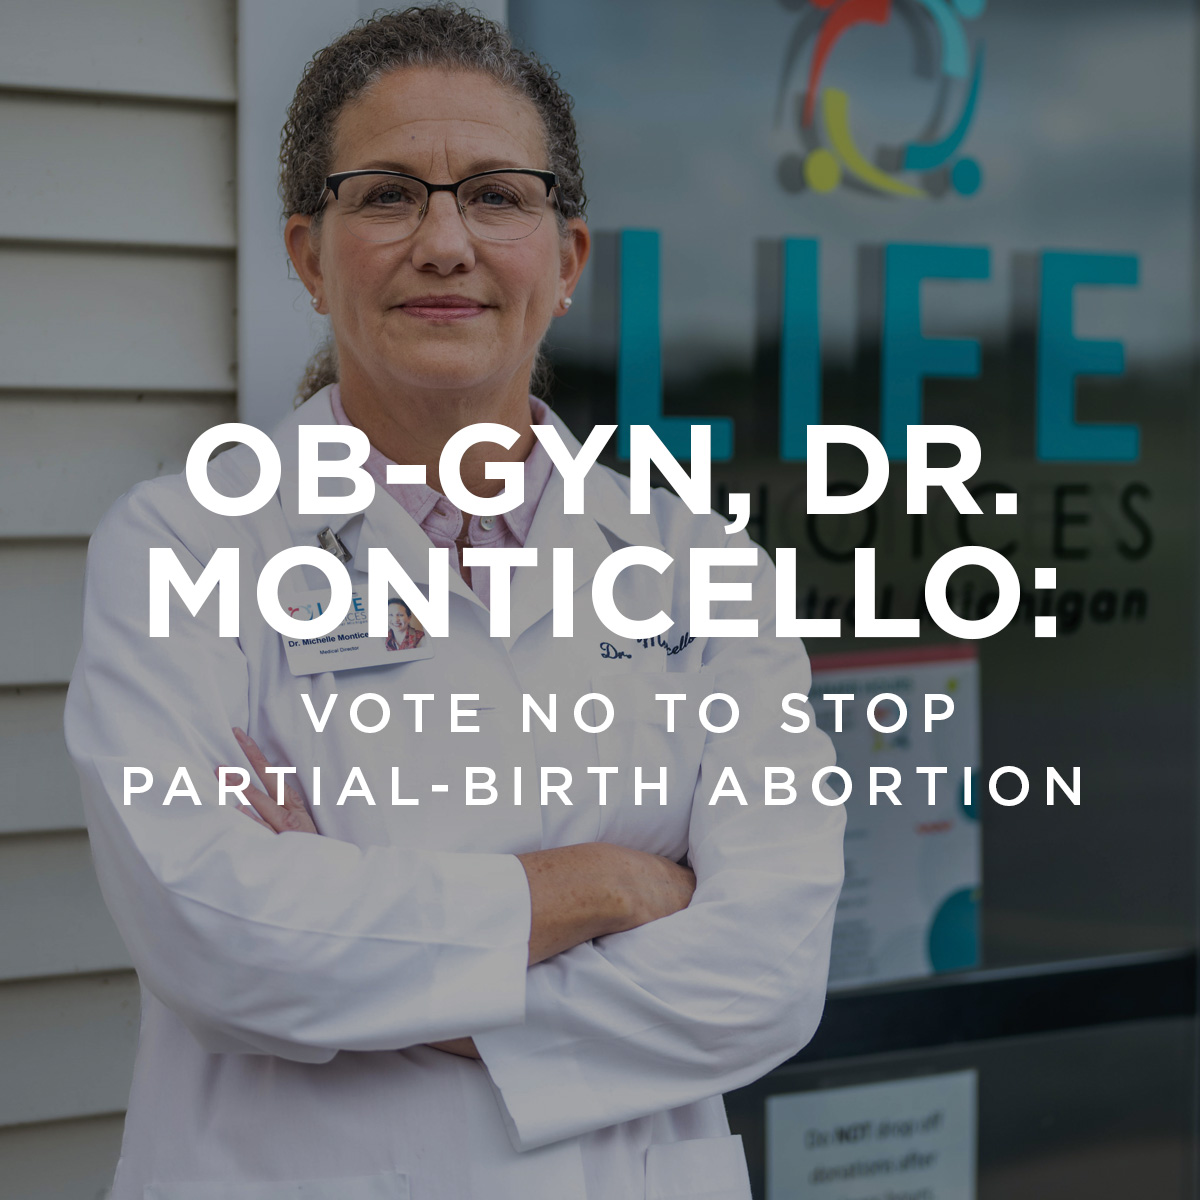  OB-GYN, Dr. Monticello: Vote no to stop partial-birth abortion